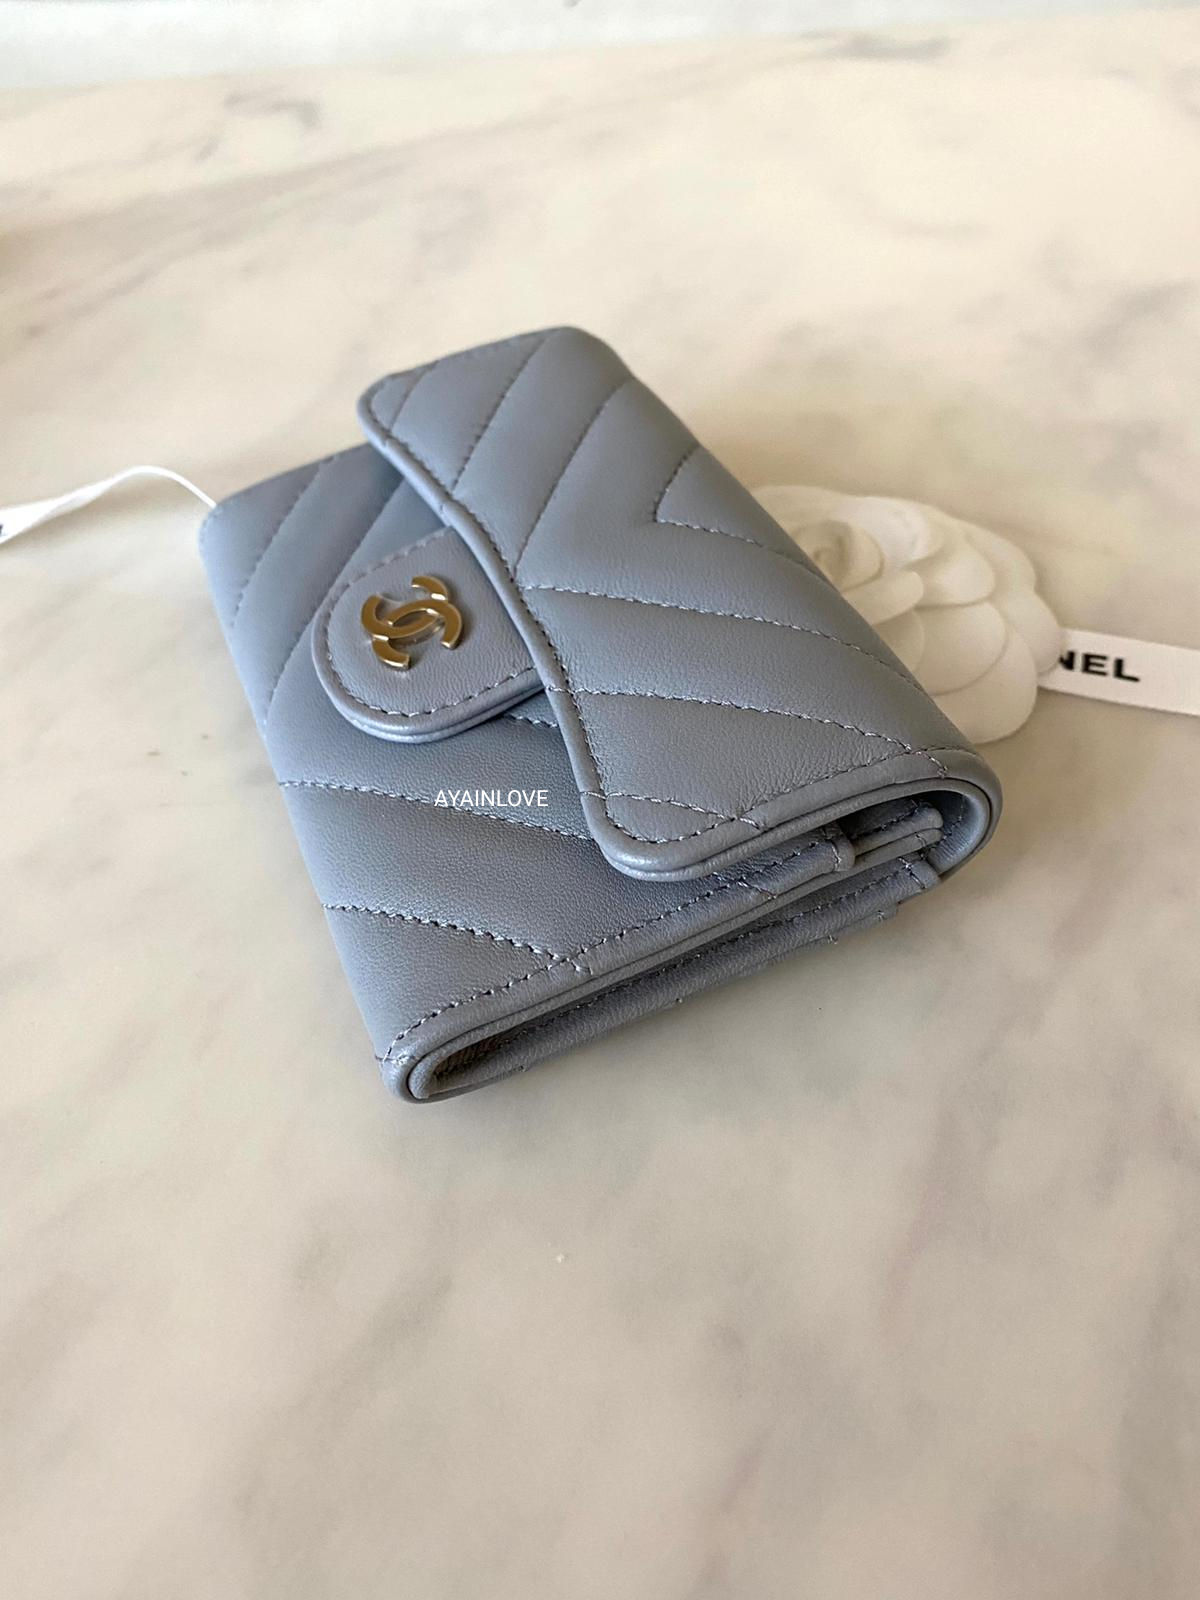 CHANEL, Bags, Chanel Grey Card Holder Light Gold Hardware